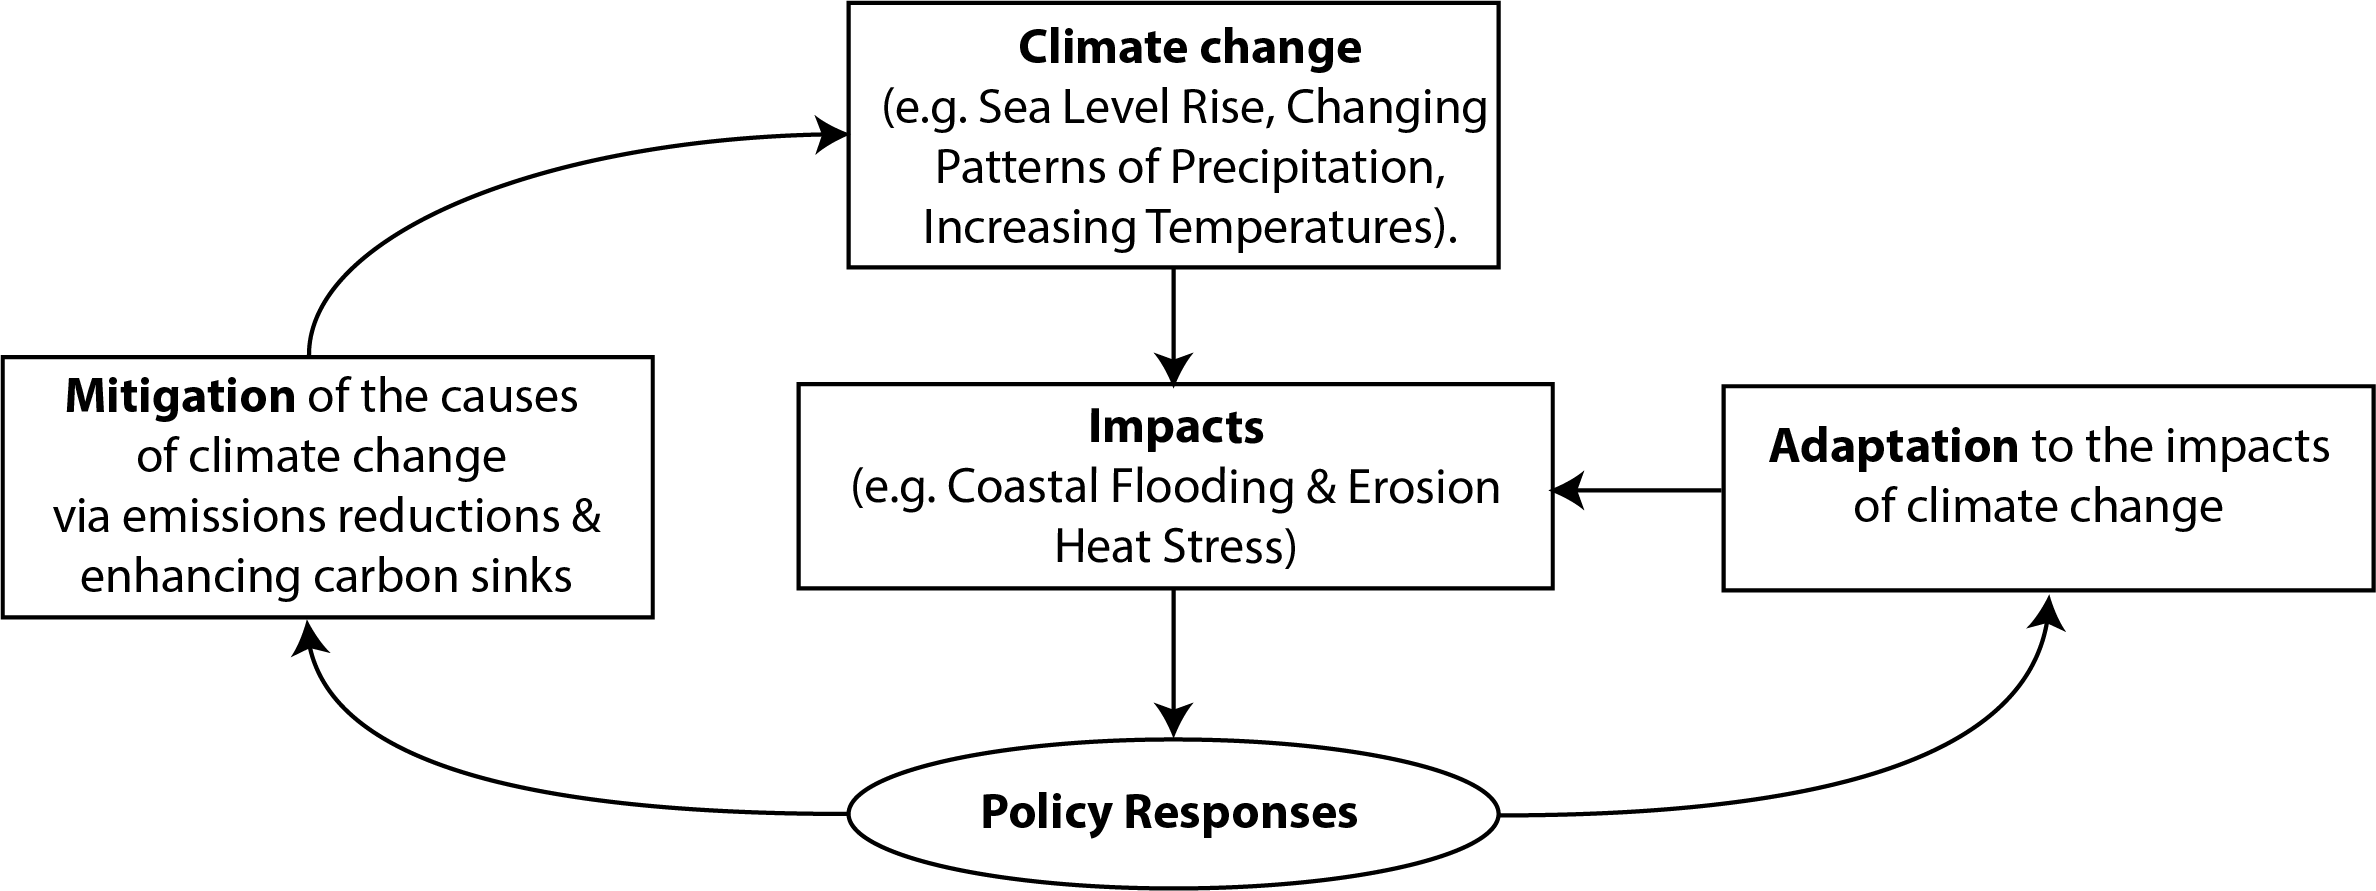 Adaptation mitigation policy responses